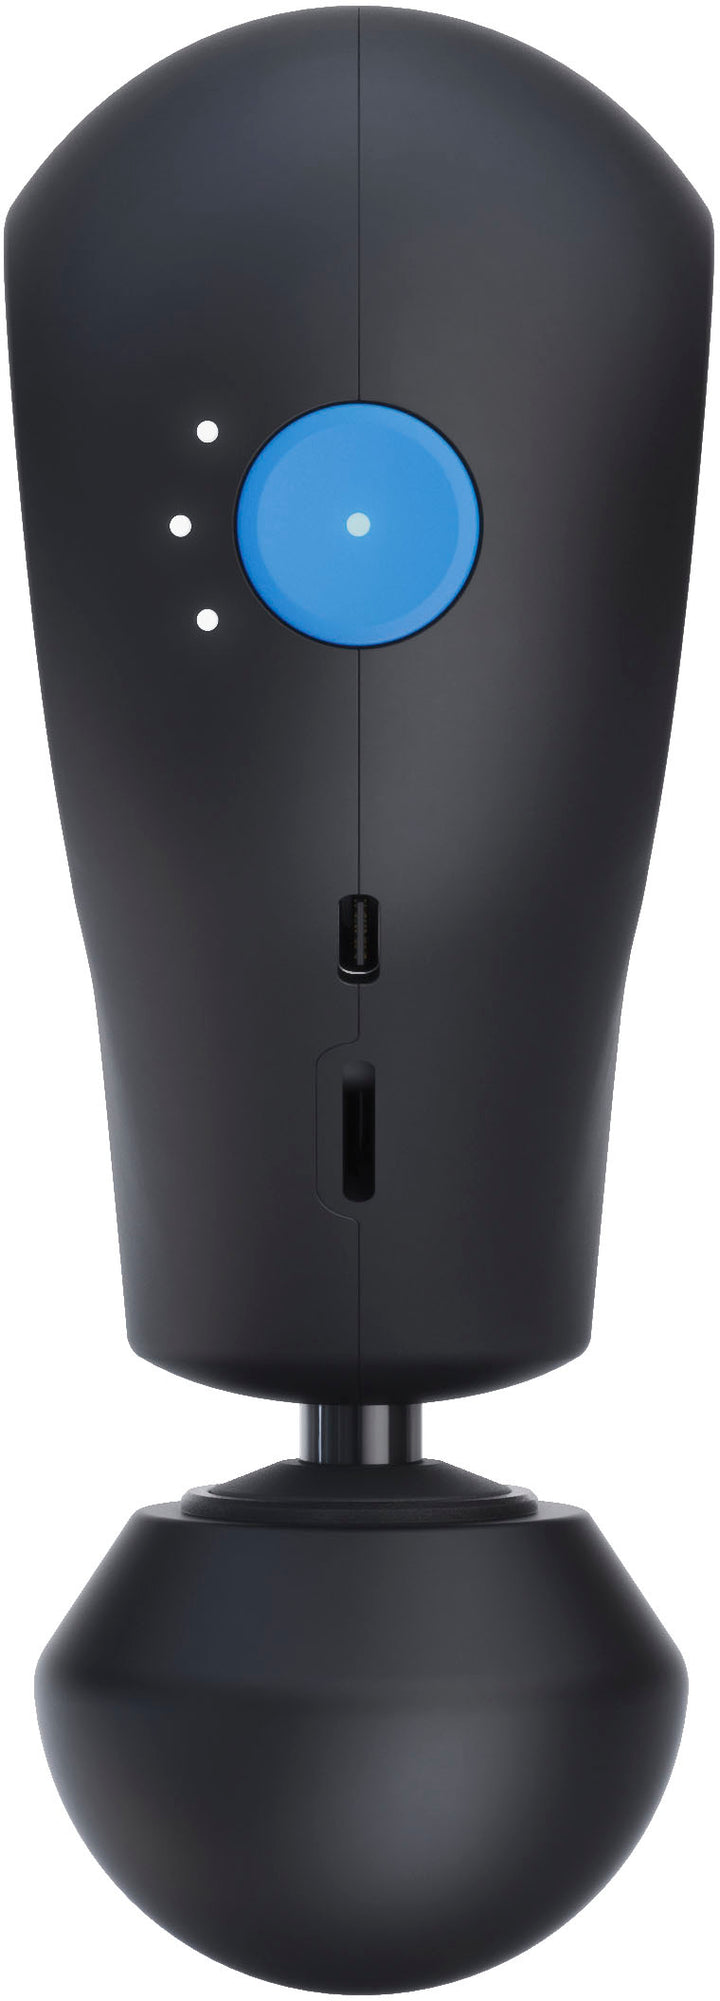 Therabody - Theragun mini (2nd Gen) Bluetooth + App Enabled Portable Massage Gun & 30% Lighter (Latest Model) - Black_5